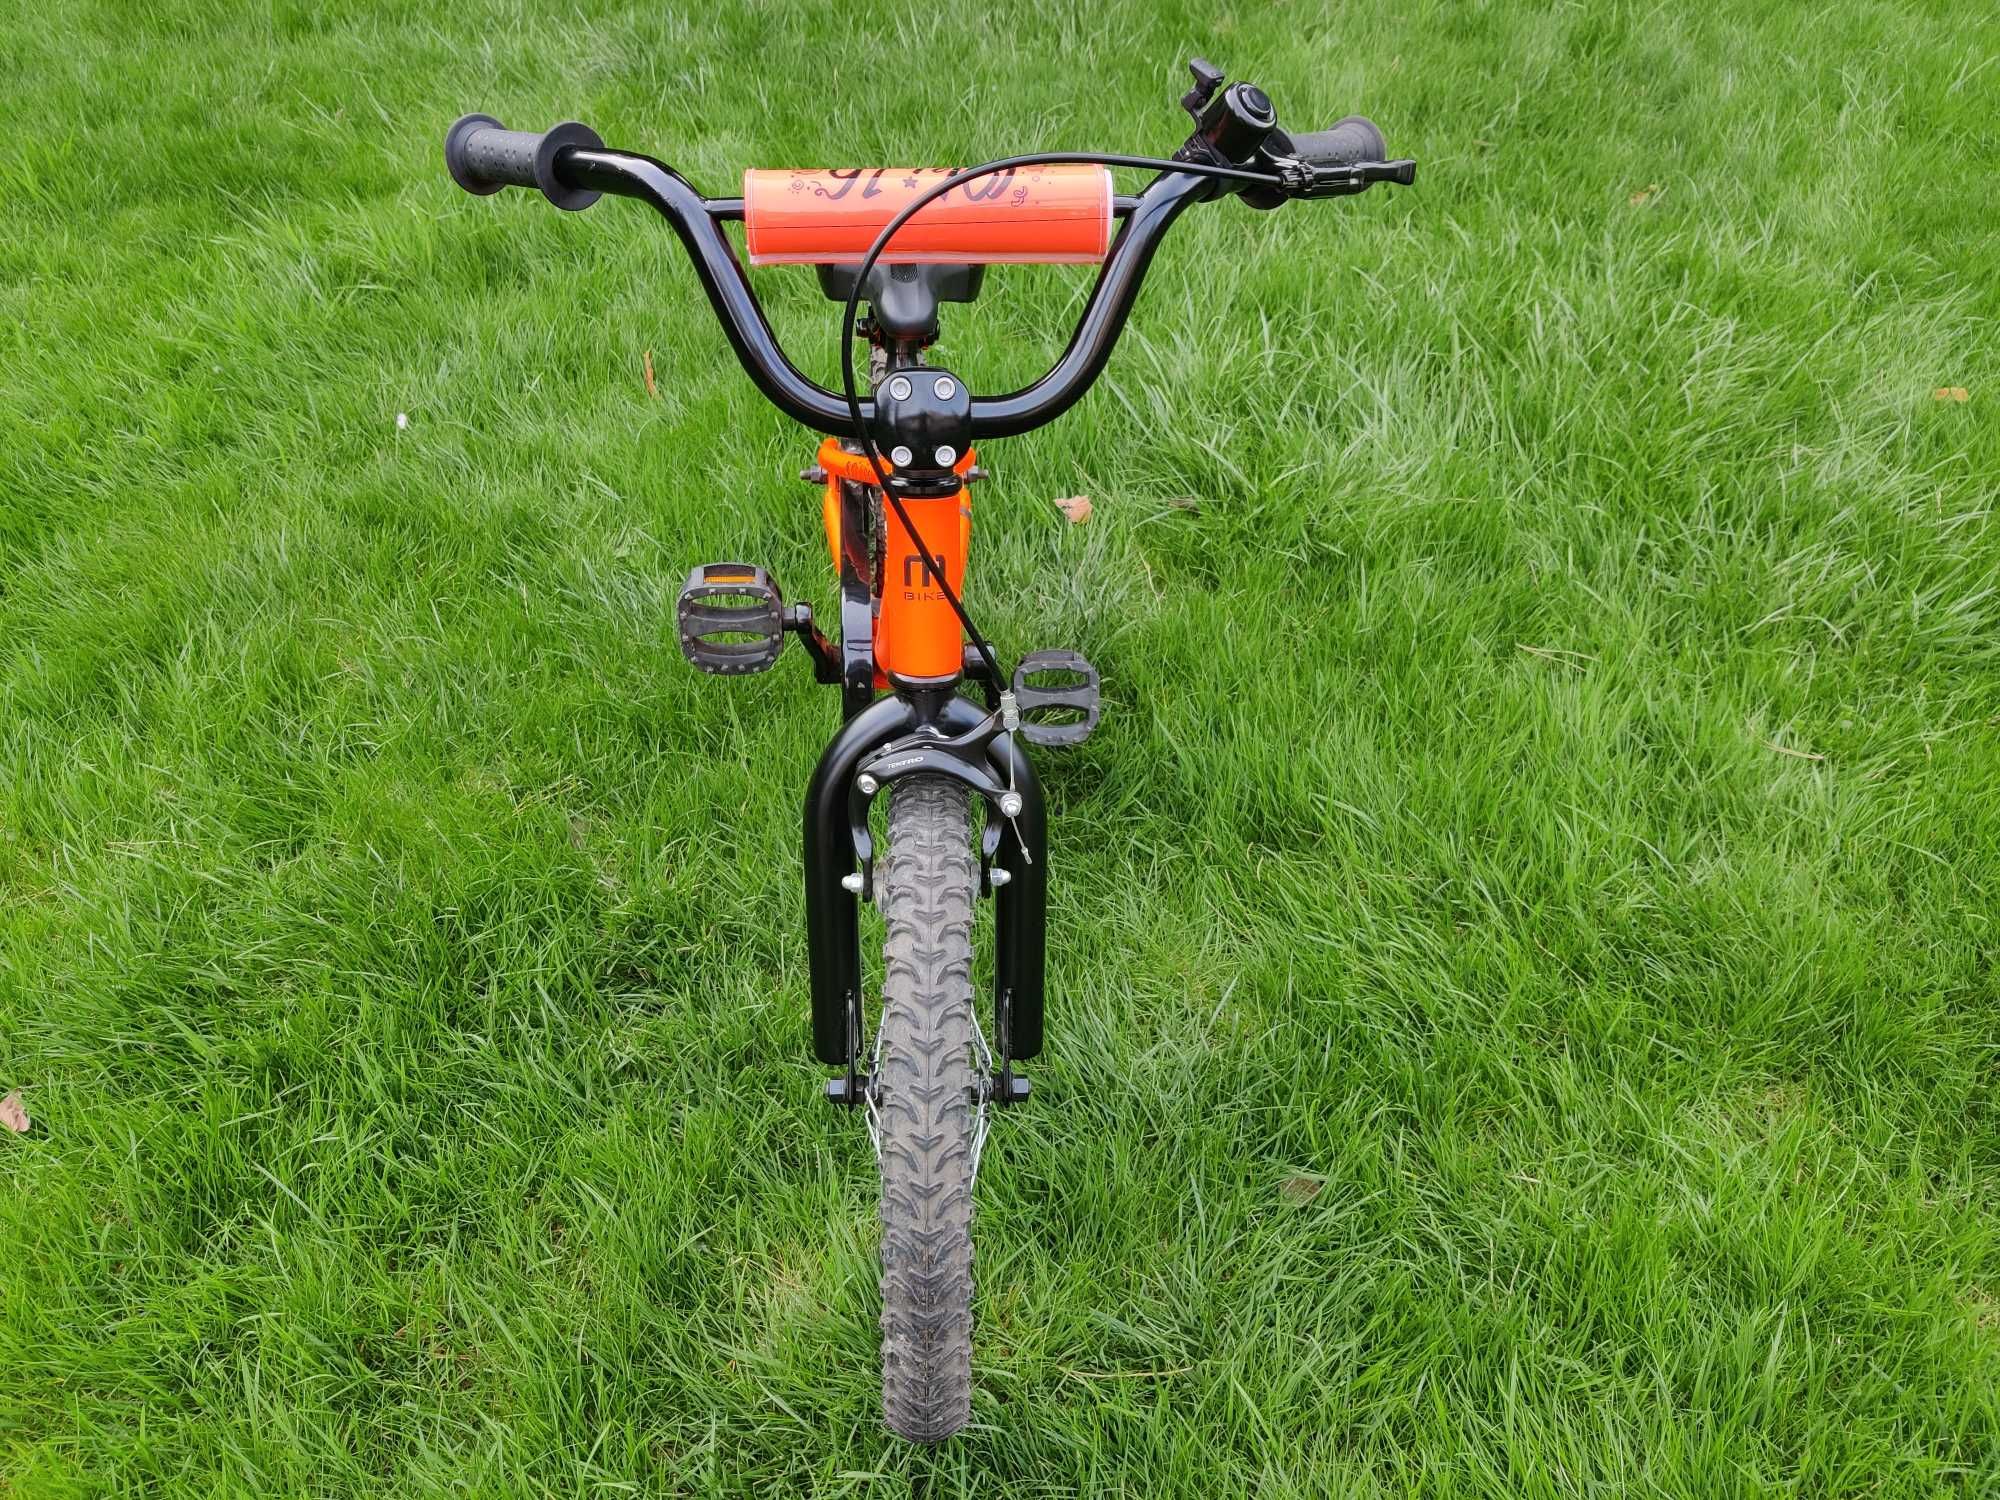 Rower dla dziecka M-Bike Qki16, GWARANCJA, zakup 03.2023, aluminium !